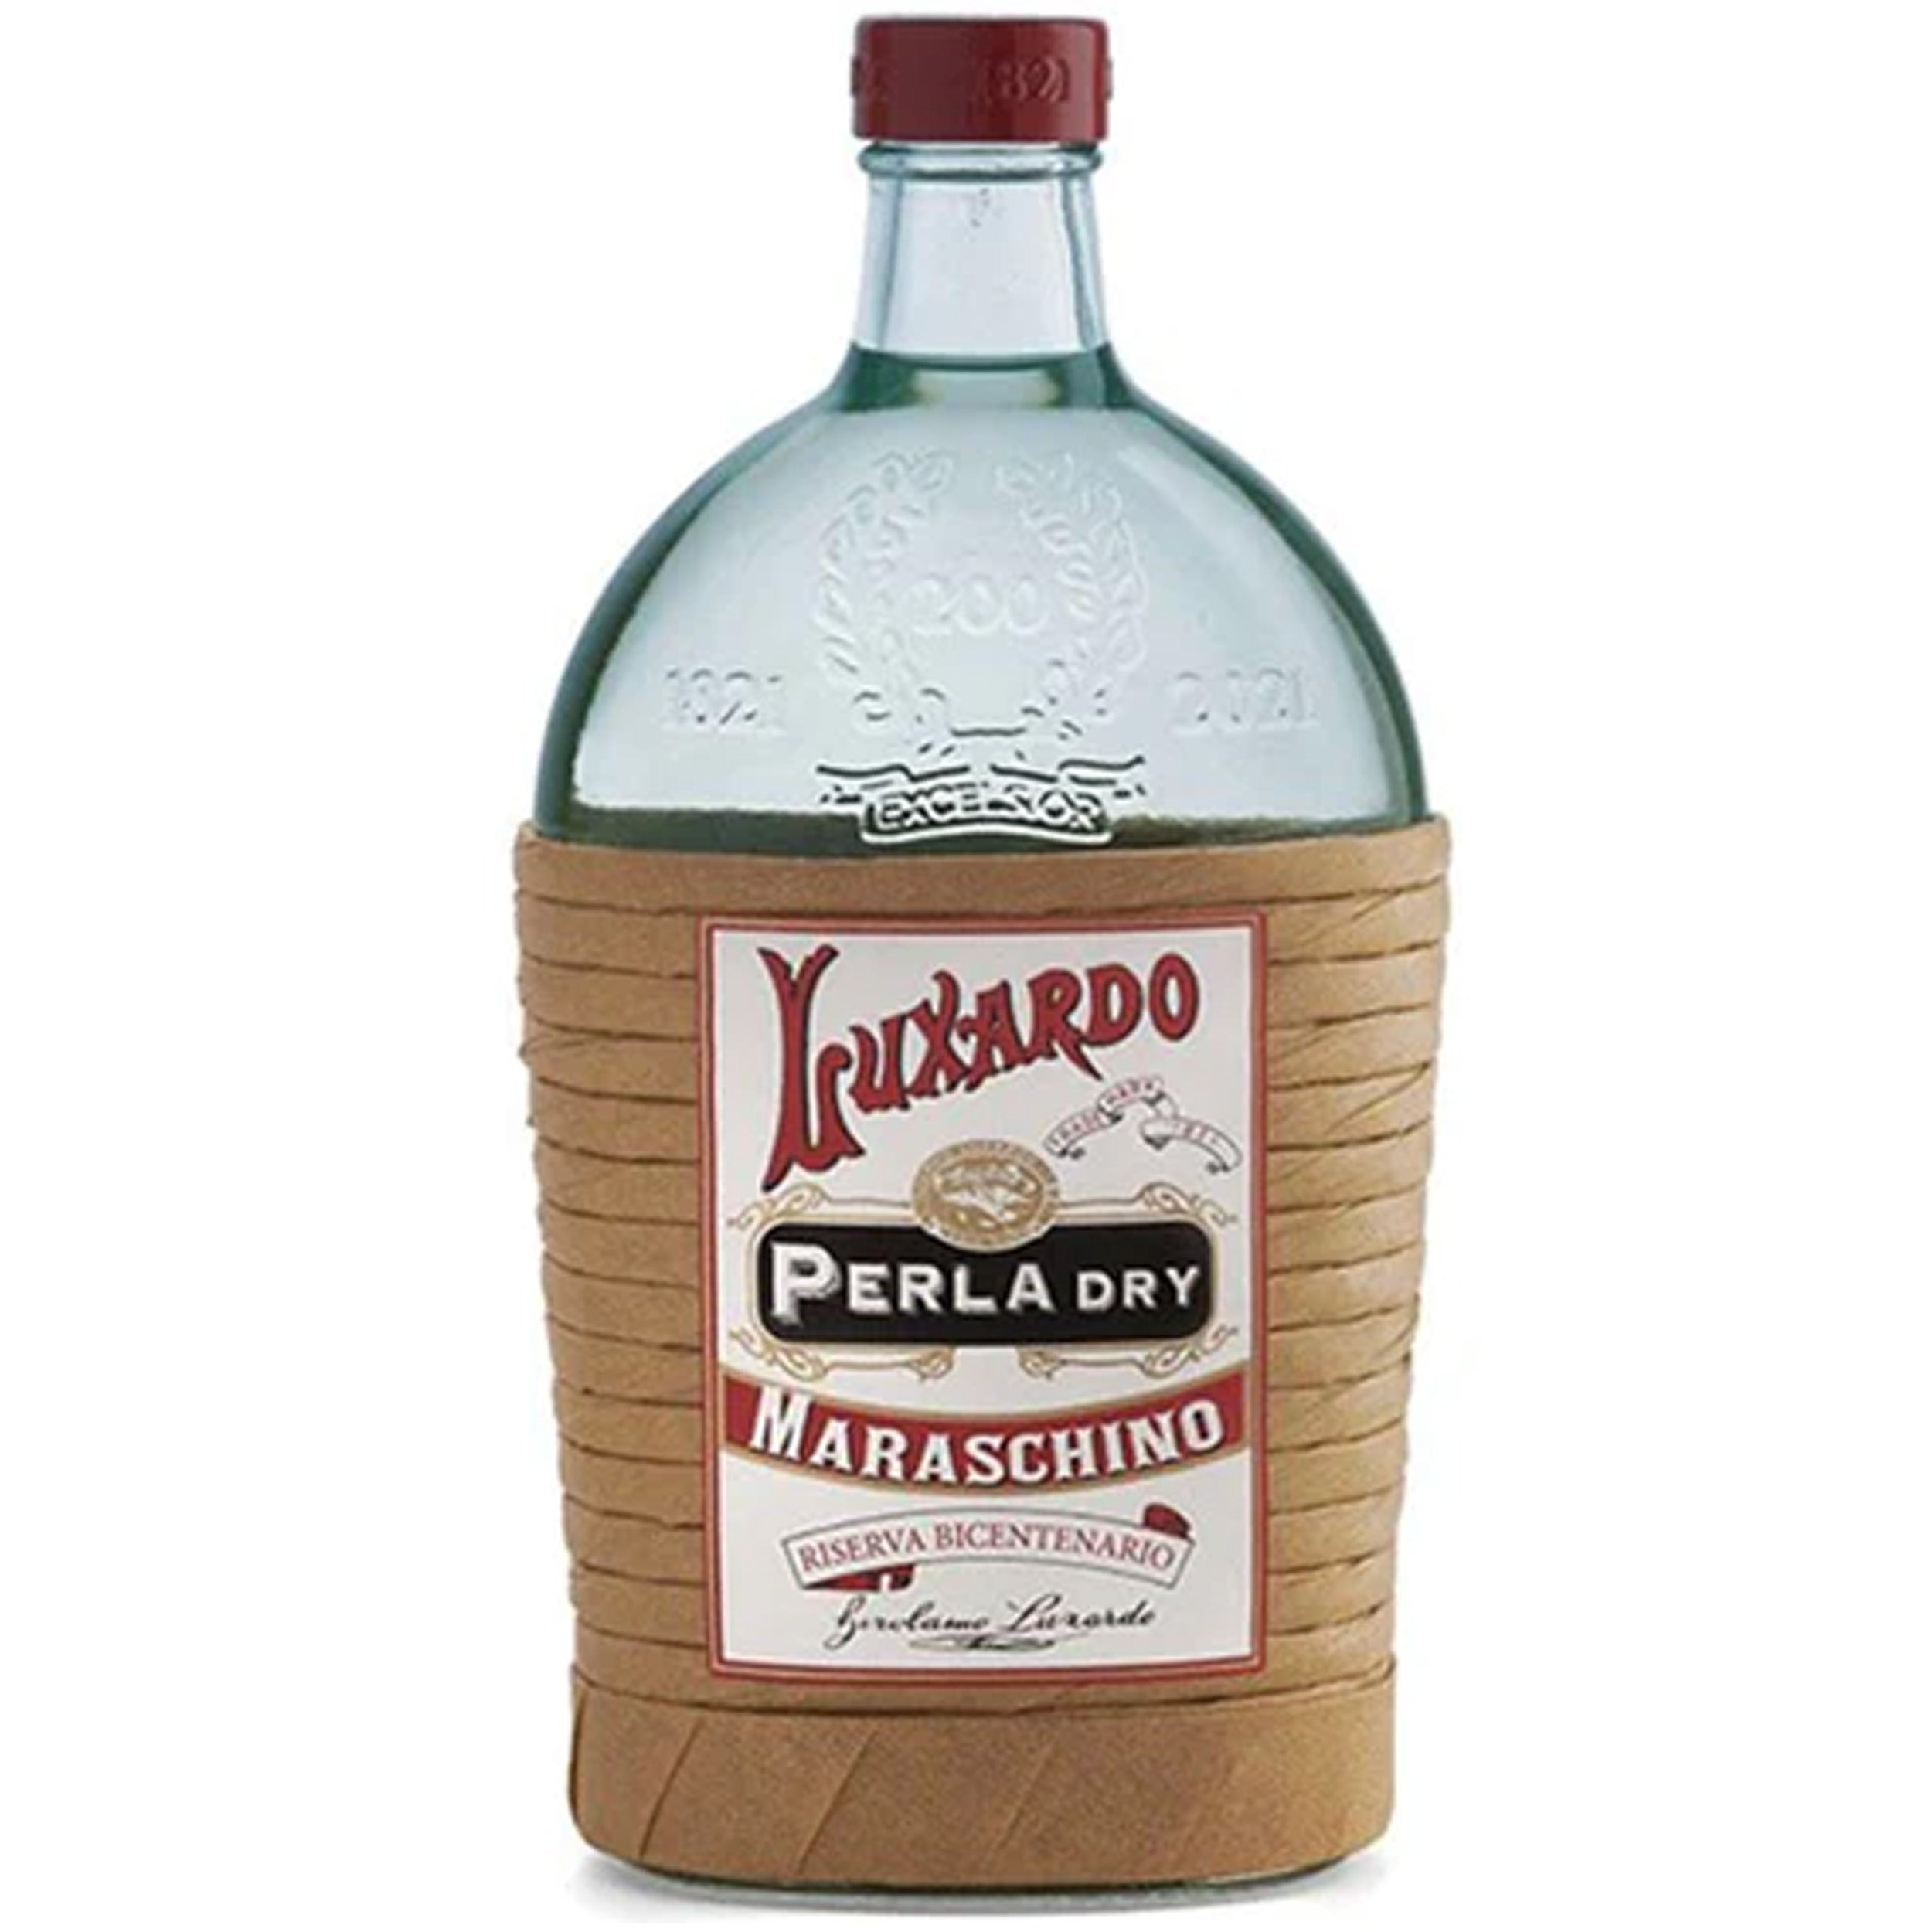 Luxardo Maraschino Perla Dry